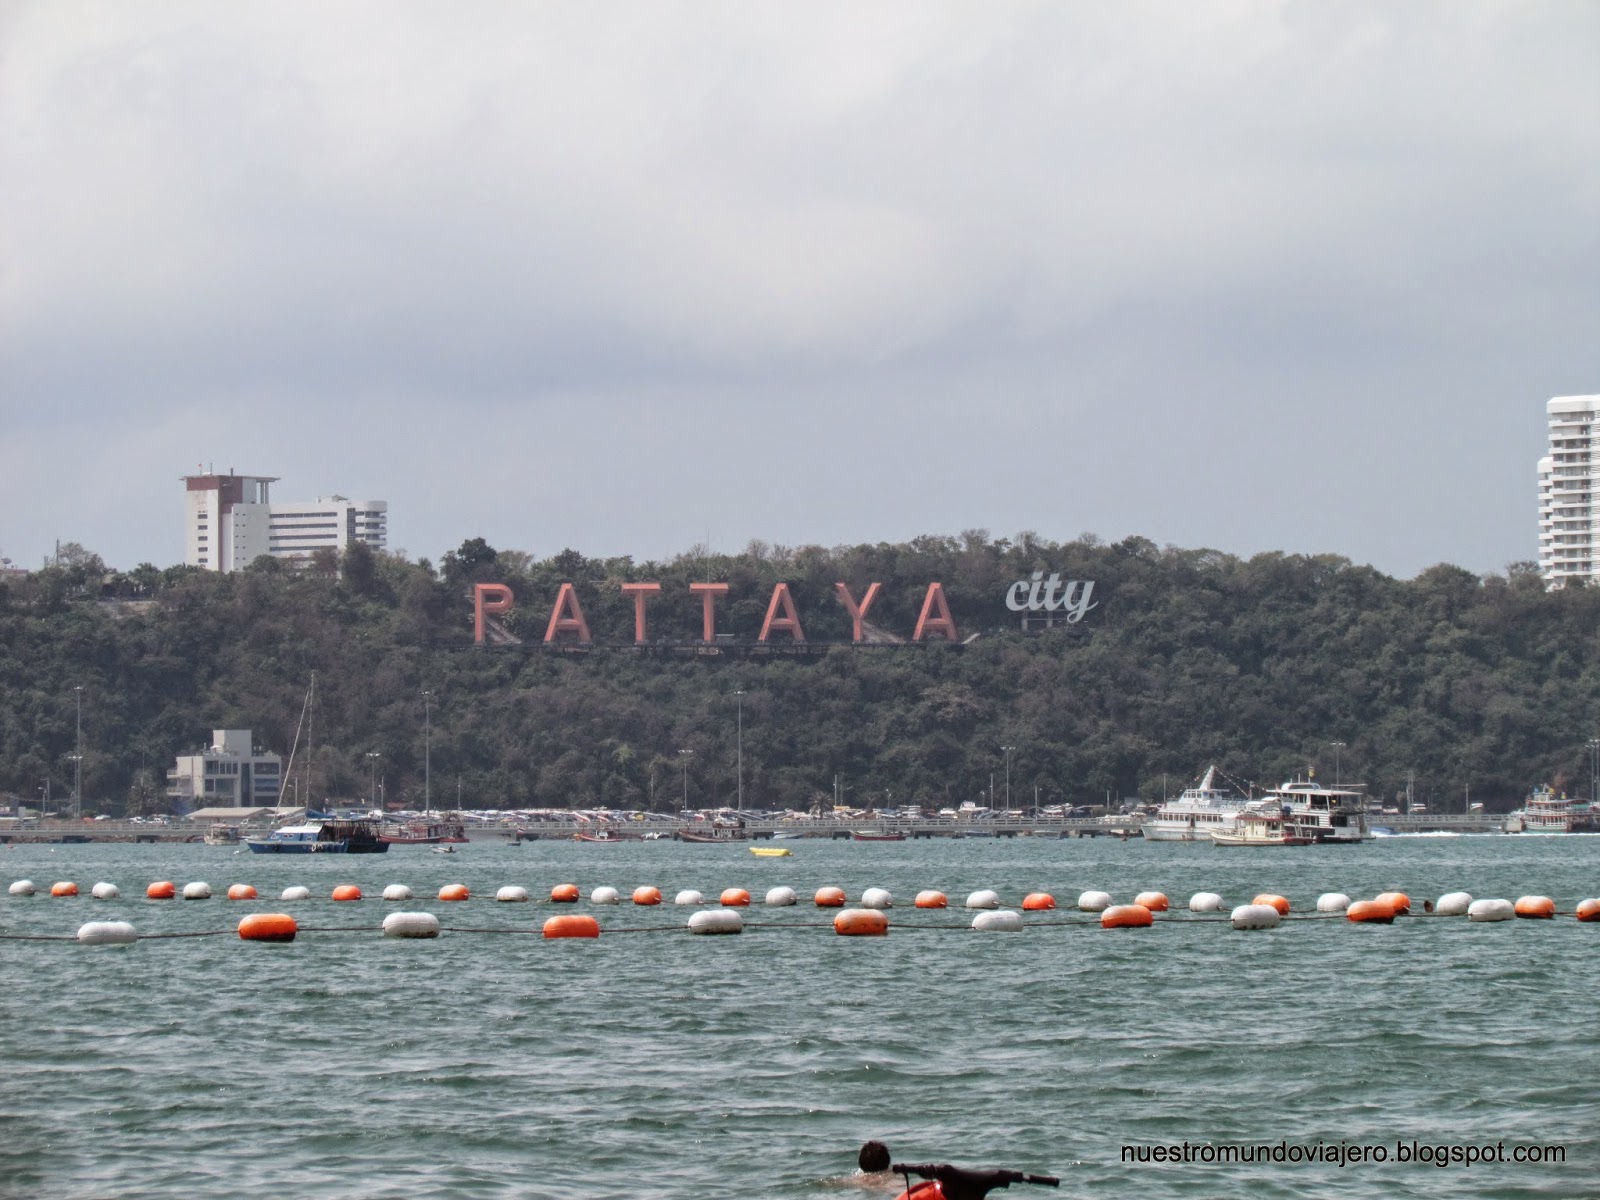 Pattaya city ~ NUESTRO MUNDO VIAJERO